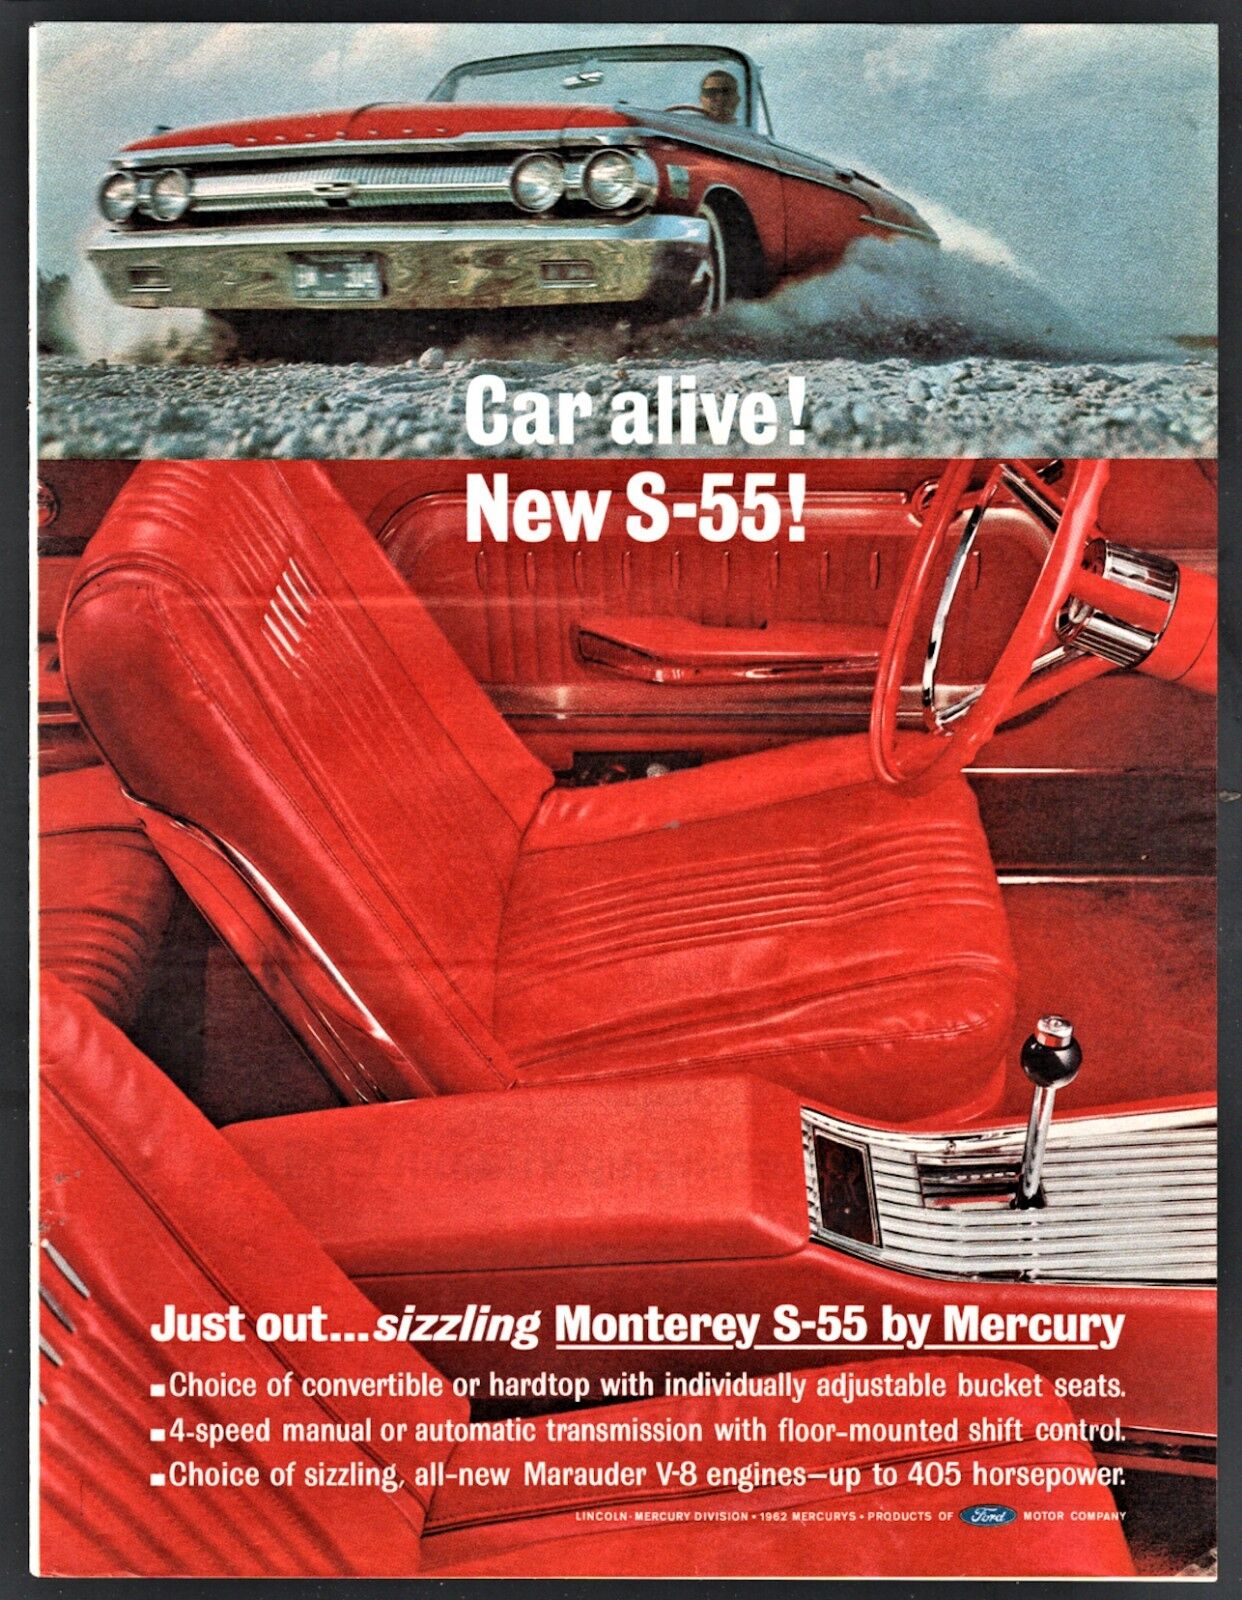 1962 MERCURY Monterey S-55 Red Convertible w/ nice interior view AD